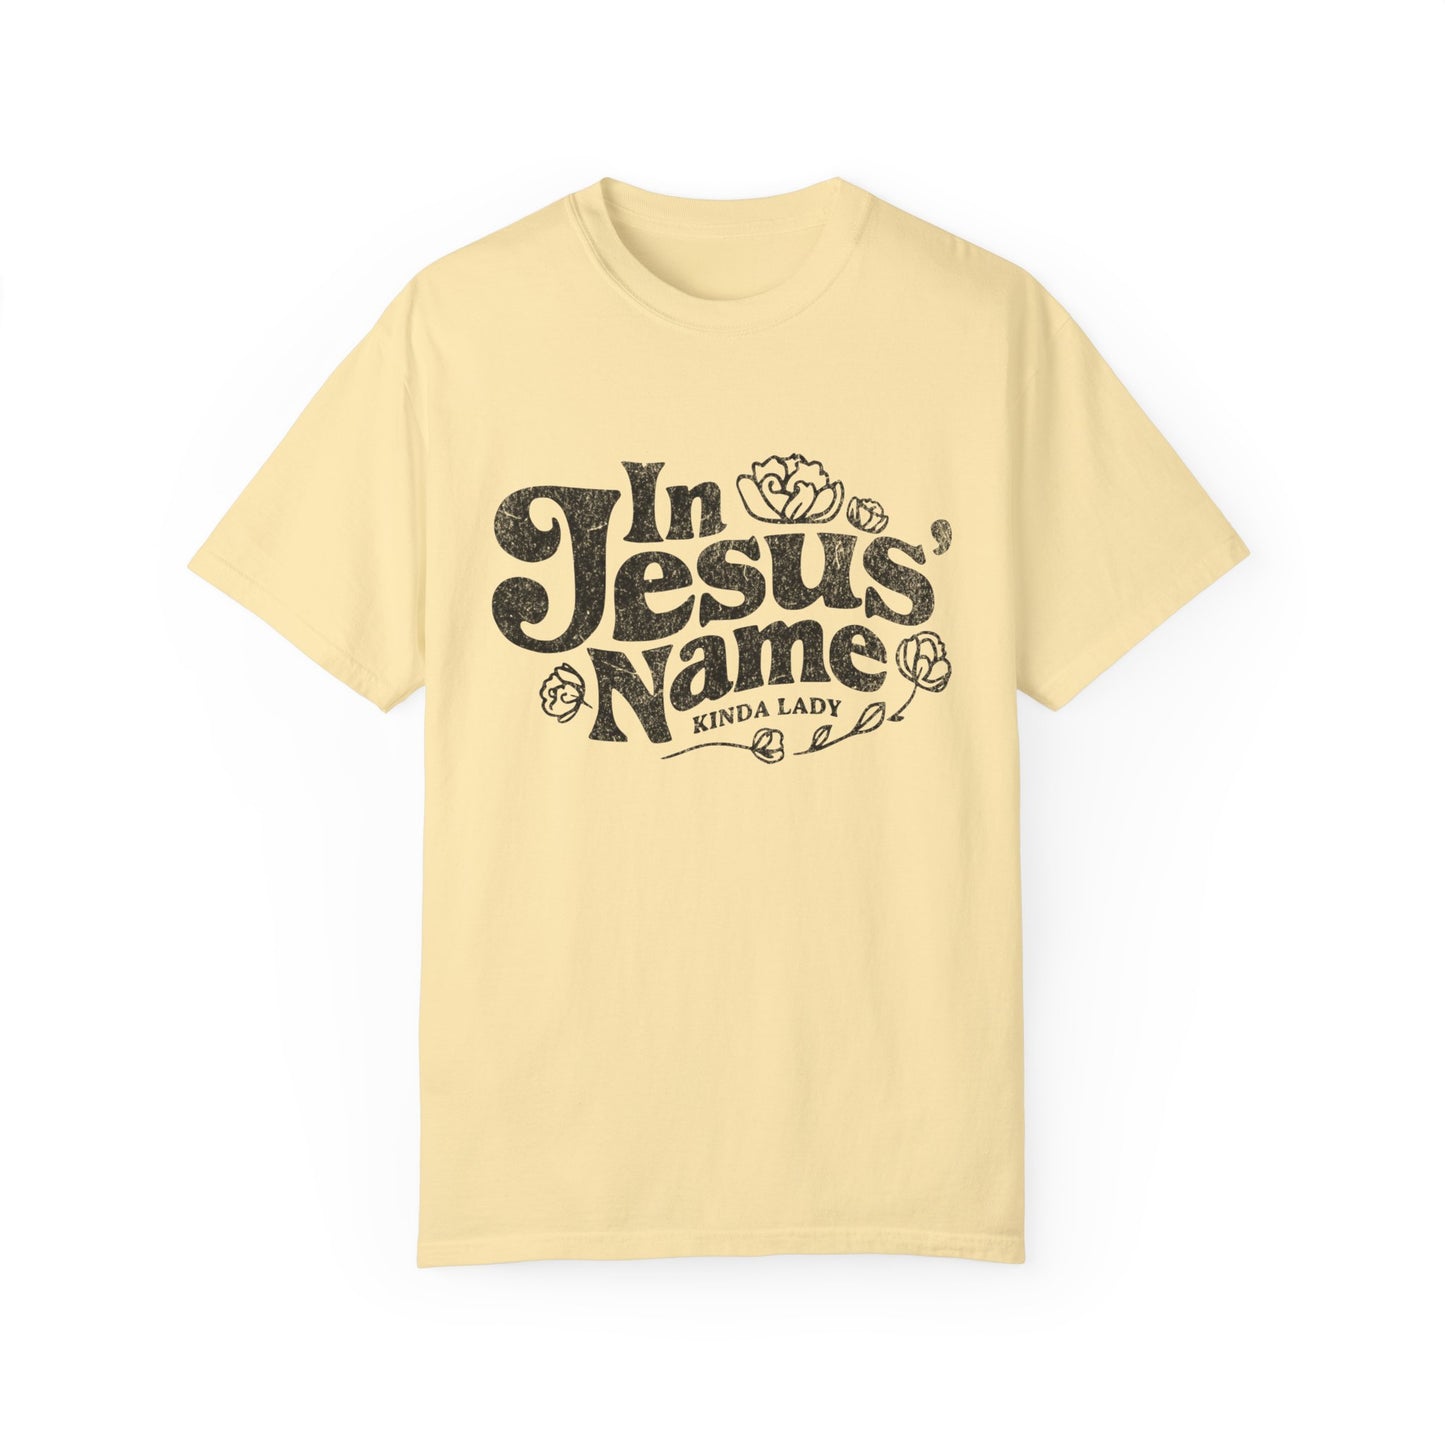 In Jesus' Name Kinda Lady Unisex Garment-Dyed T-shirt